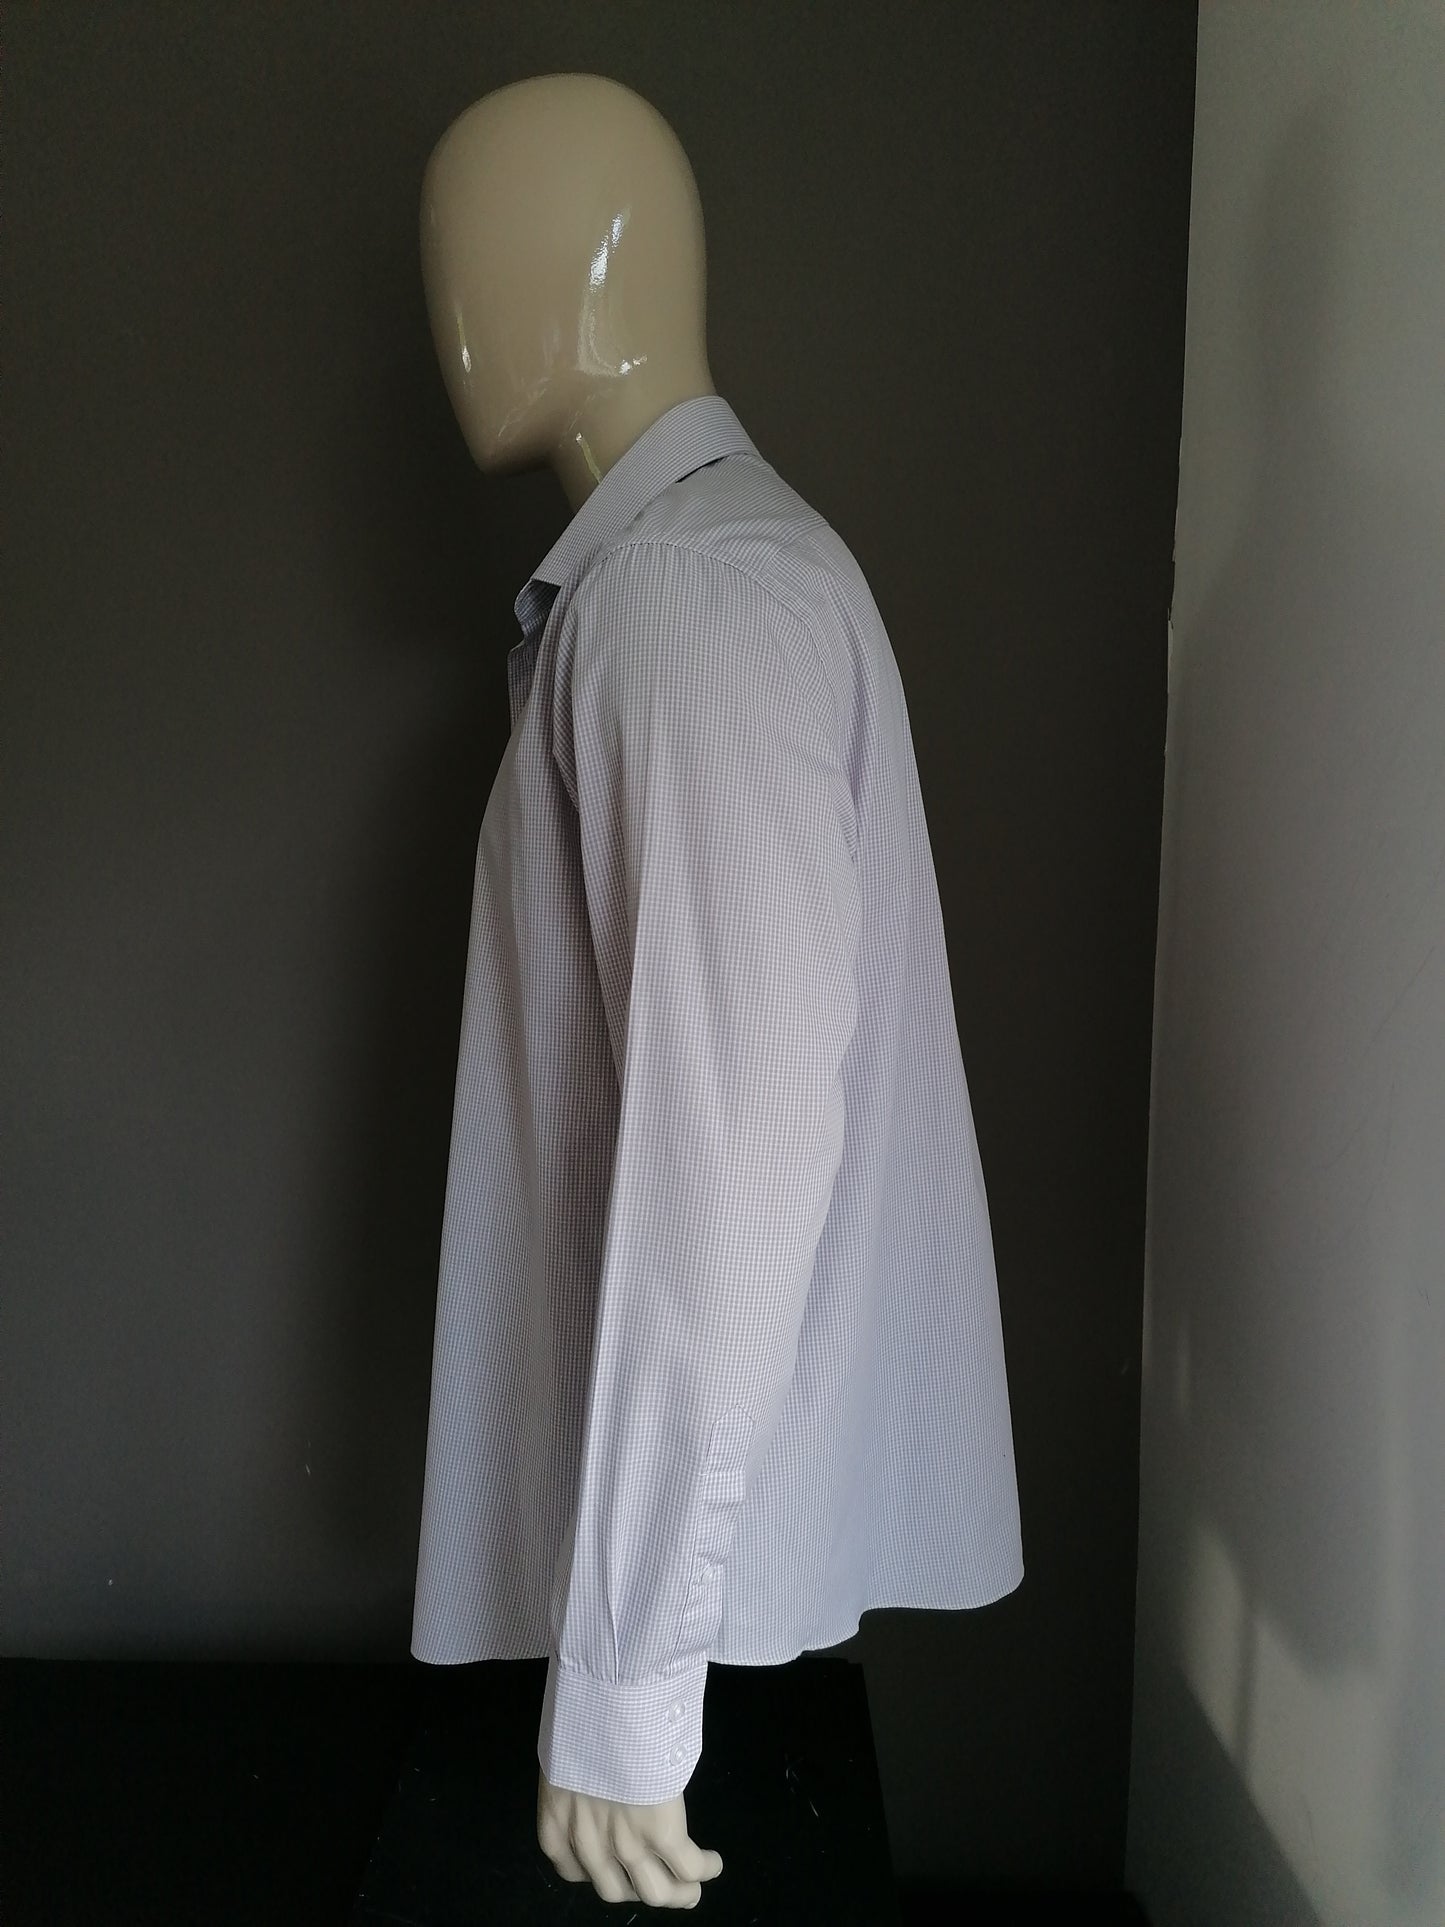 Taylor & Wright Shirt. Motivo blanco gris. Tamaño XL / XXL. Ajuste regular. Cae grandes